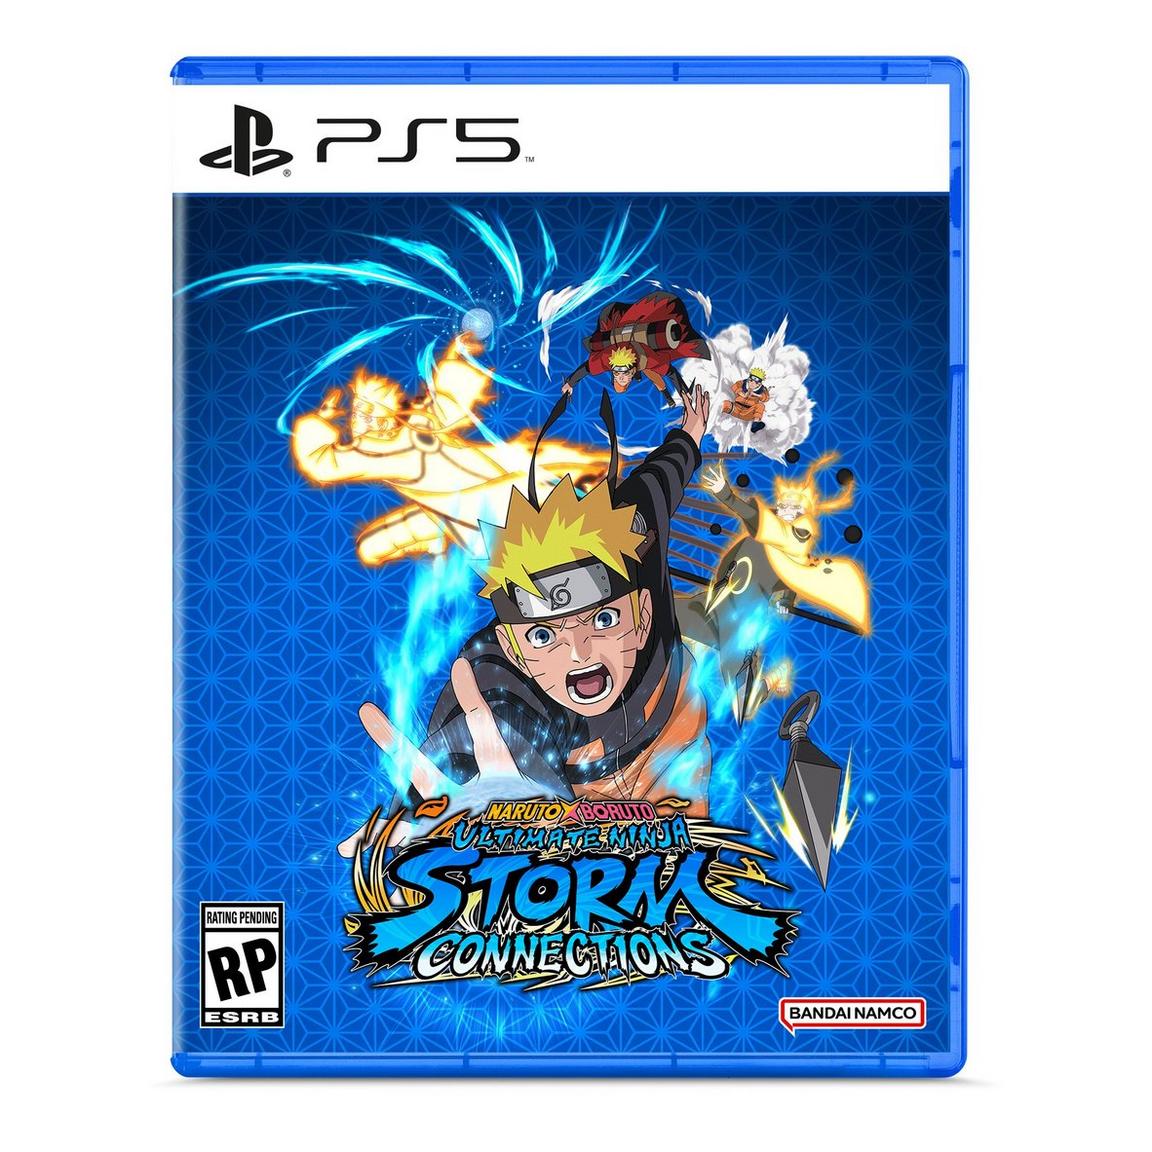 Видеоигра Naruto X Boruto Ultimate Ninja Storm Connections - PlayStation 5 naruto x boruto ultimate ninja storm connections – season pass дополнение [pc цифровая версия] цифровая версия